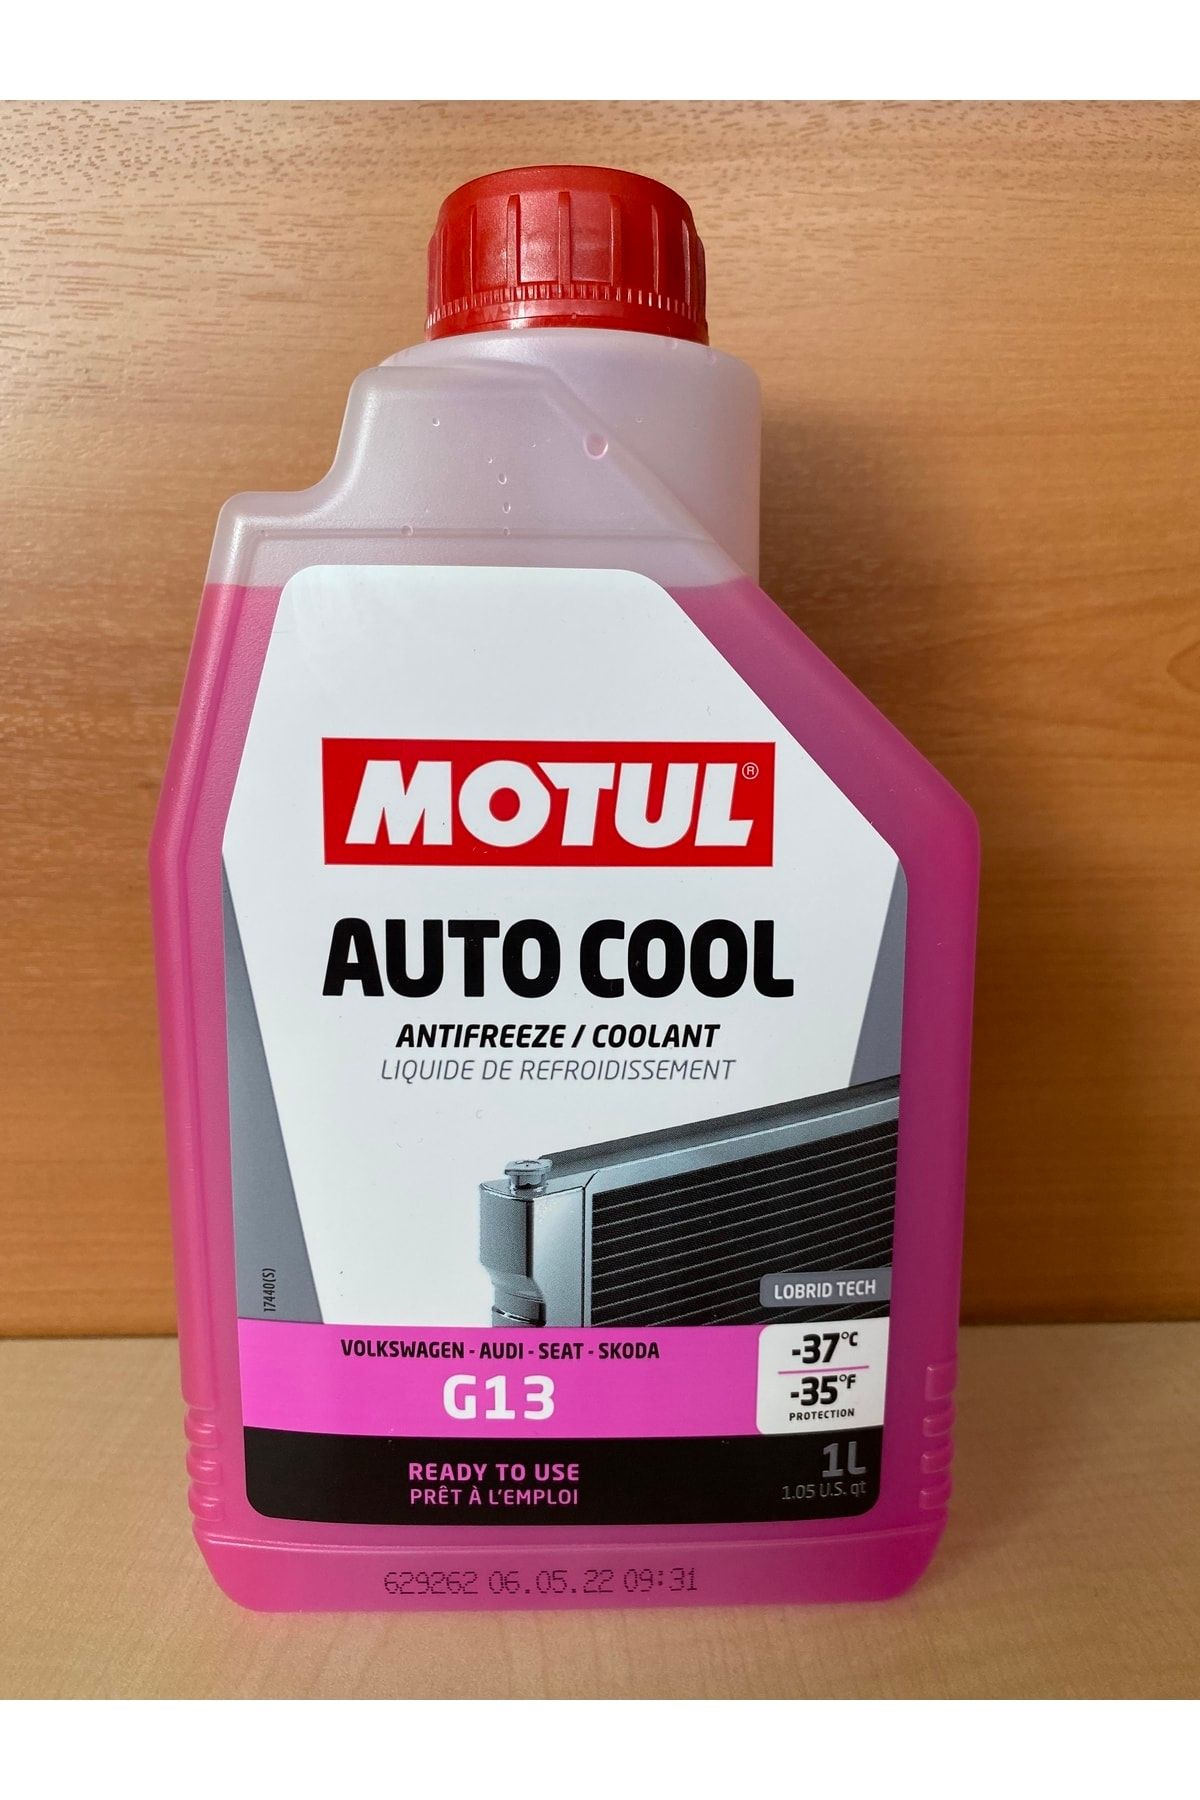 Motul Auto Cool Antıfreeze/coolant G13 1lt Üt:05/2022 Fiyatı